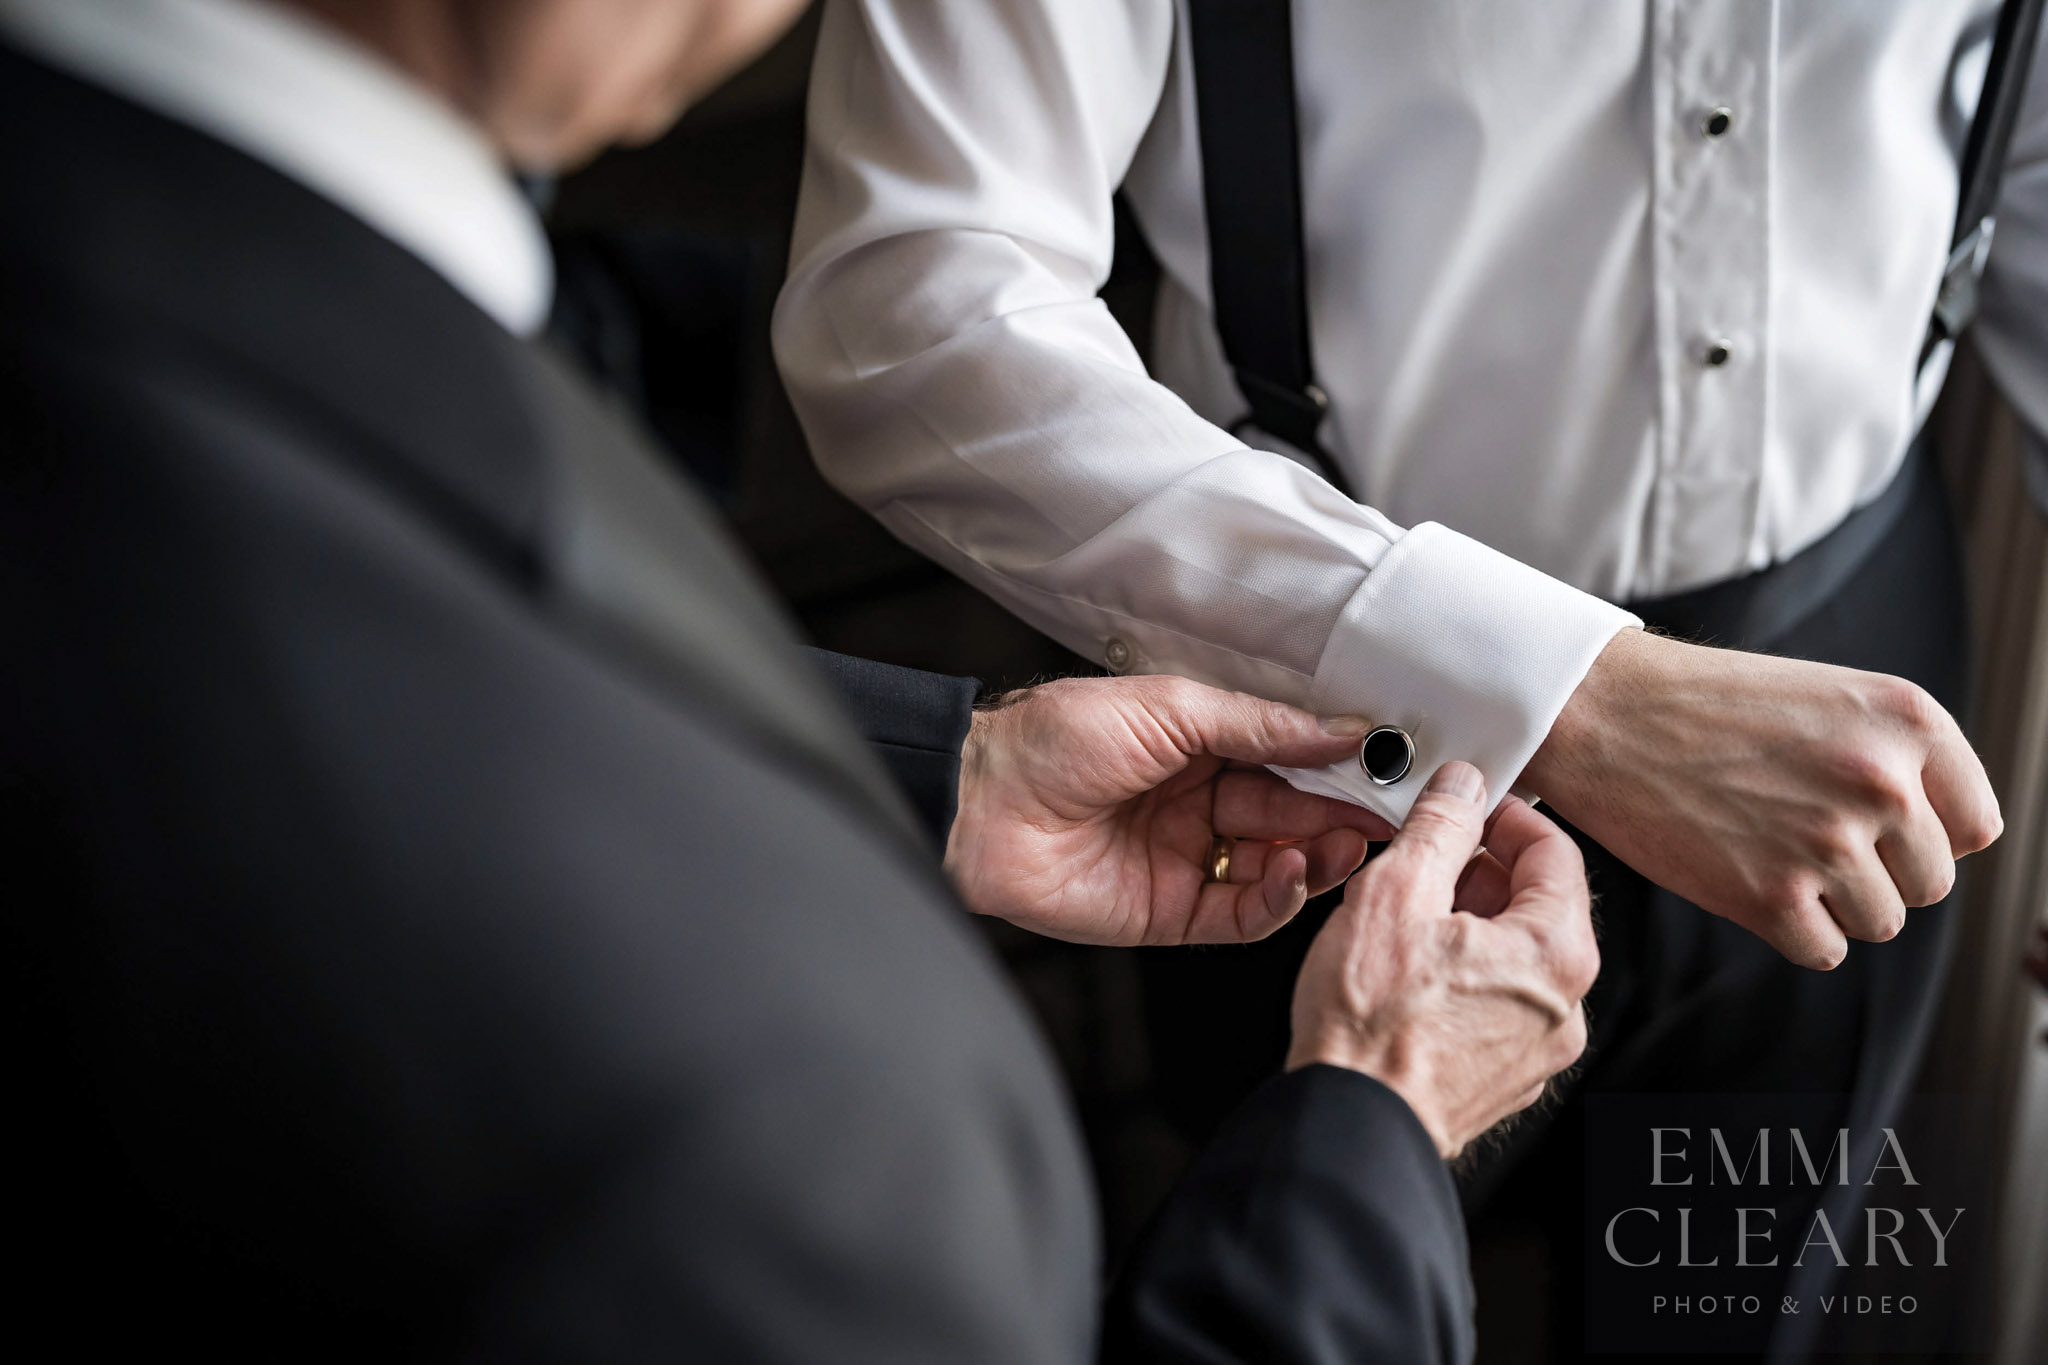 The groom's cufflinks